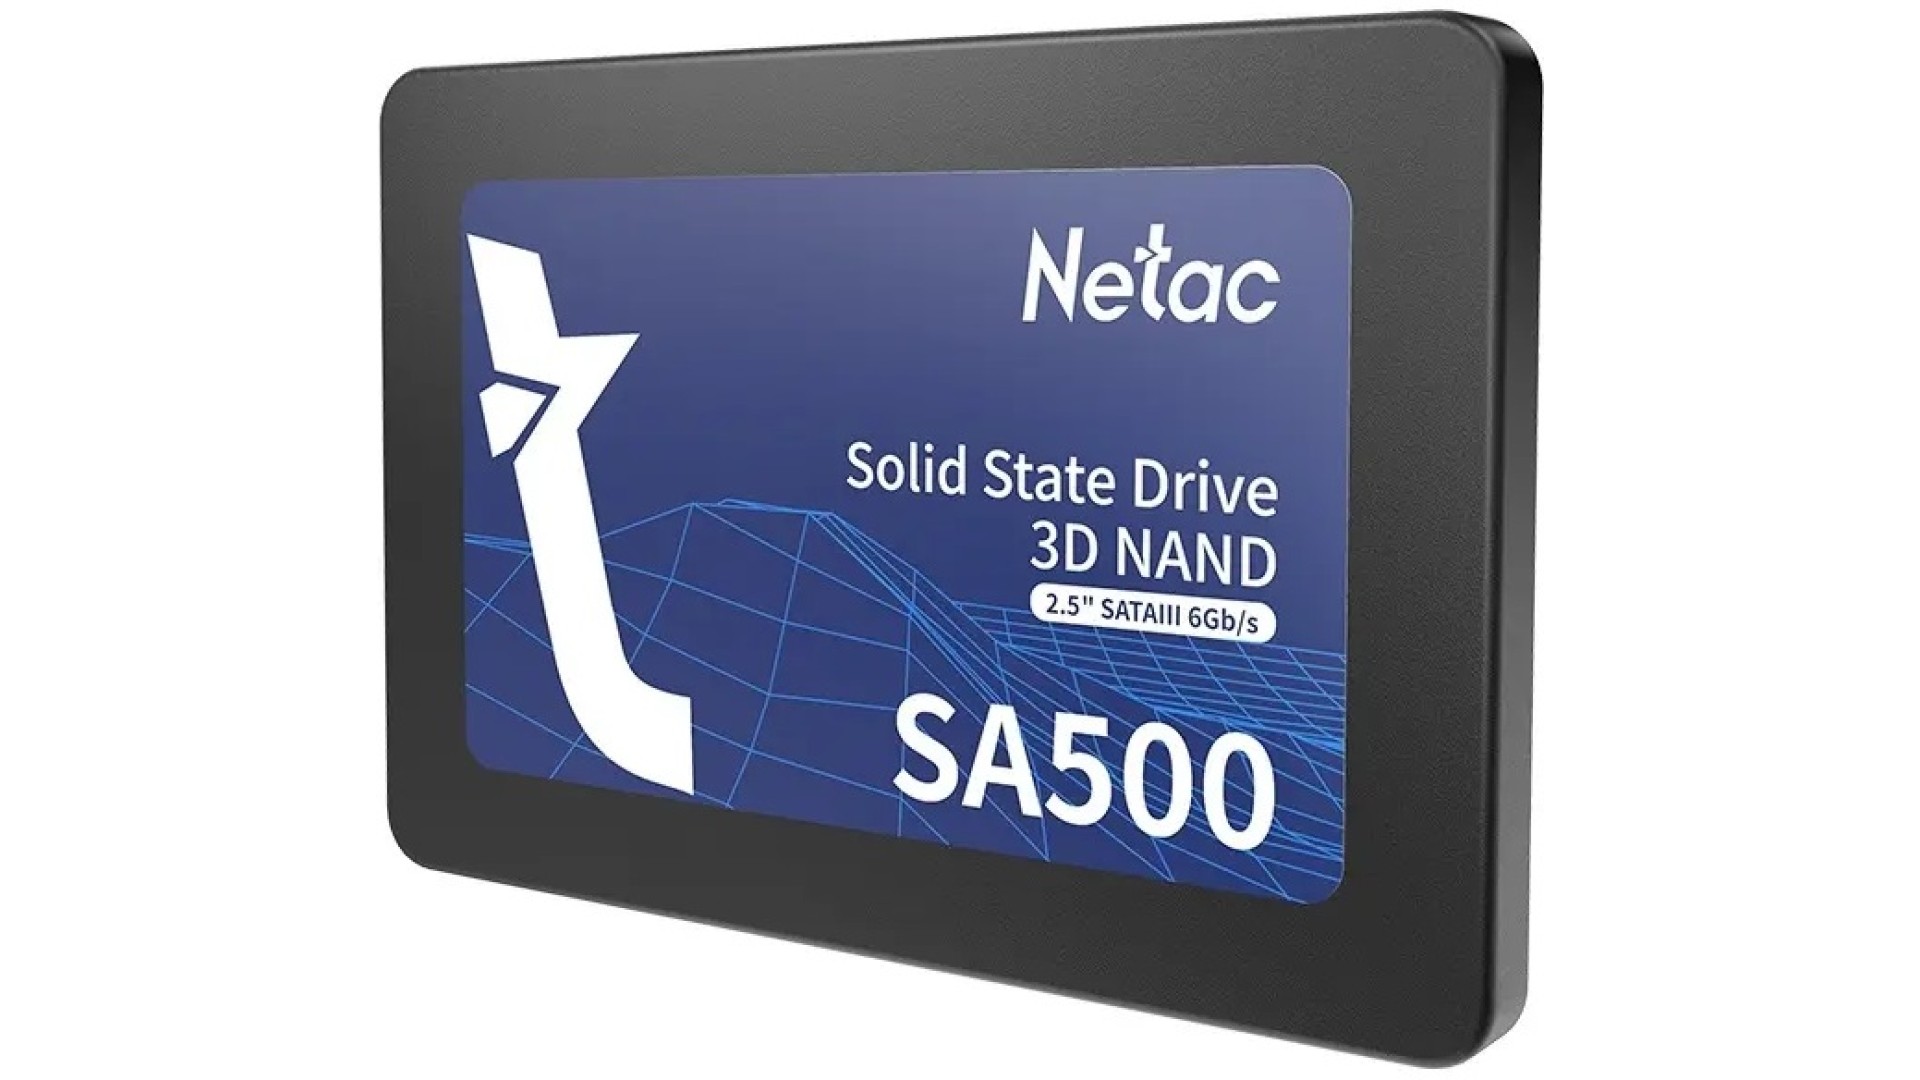 HDD / შიდა Biostar SSD SATA2.5" 240GB NT01SA500-240-S3X NETAC